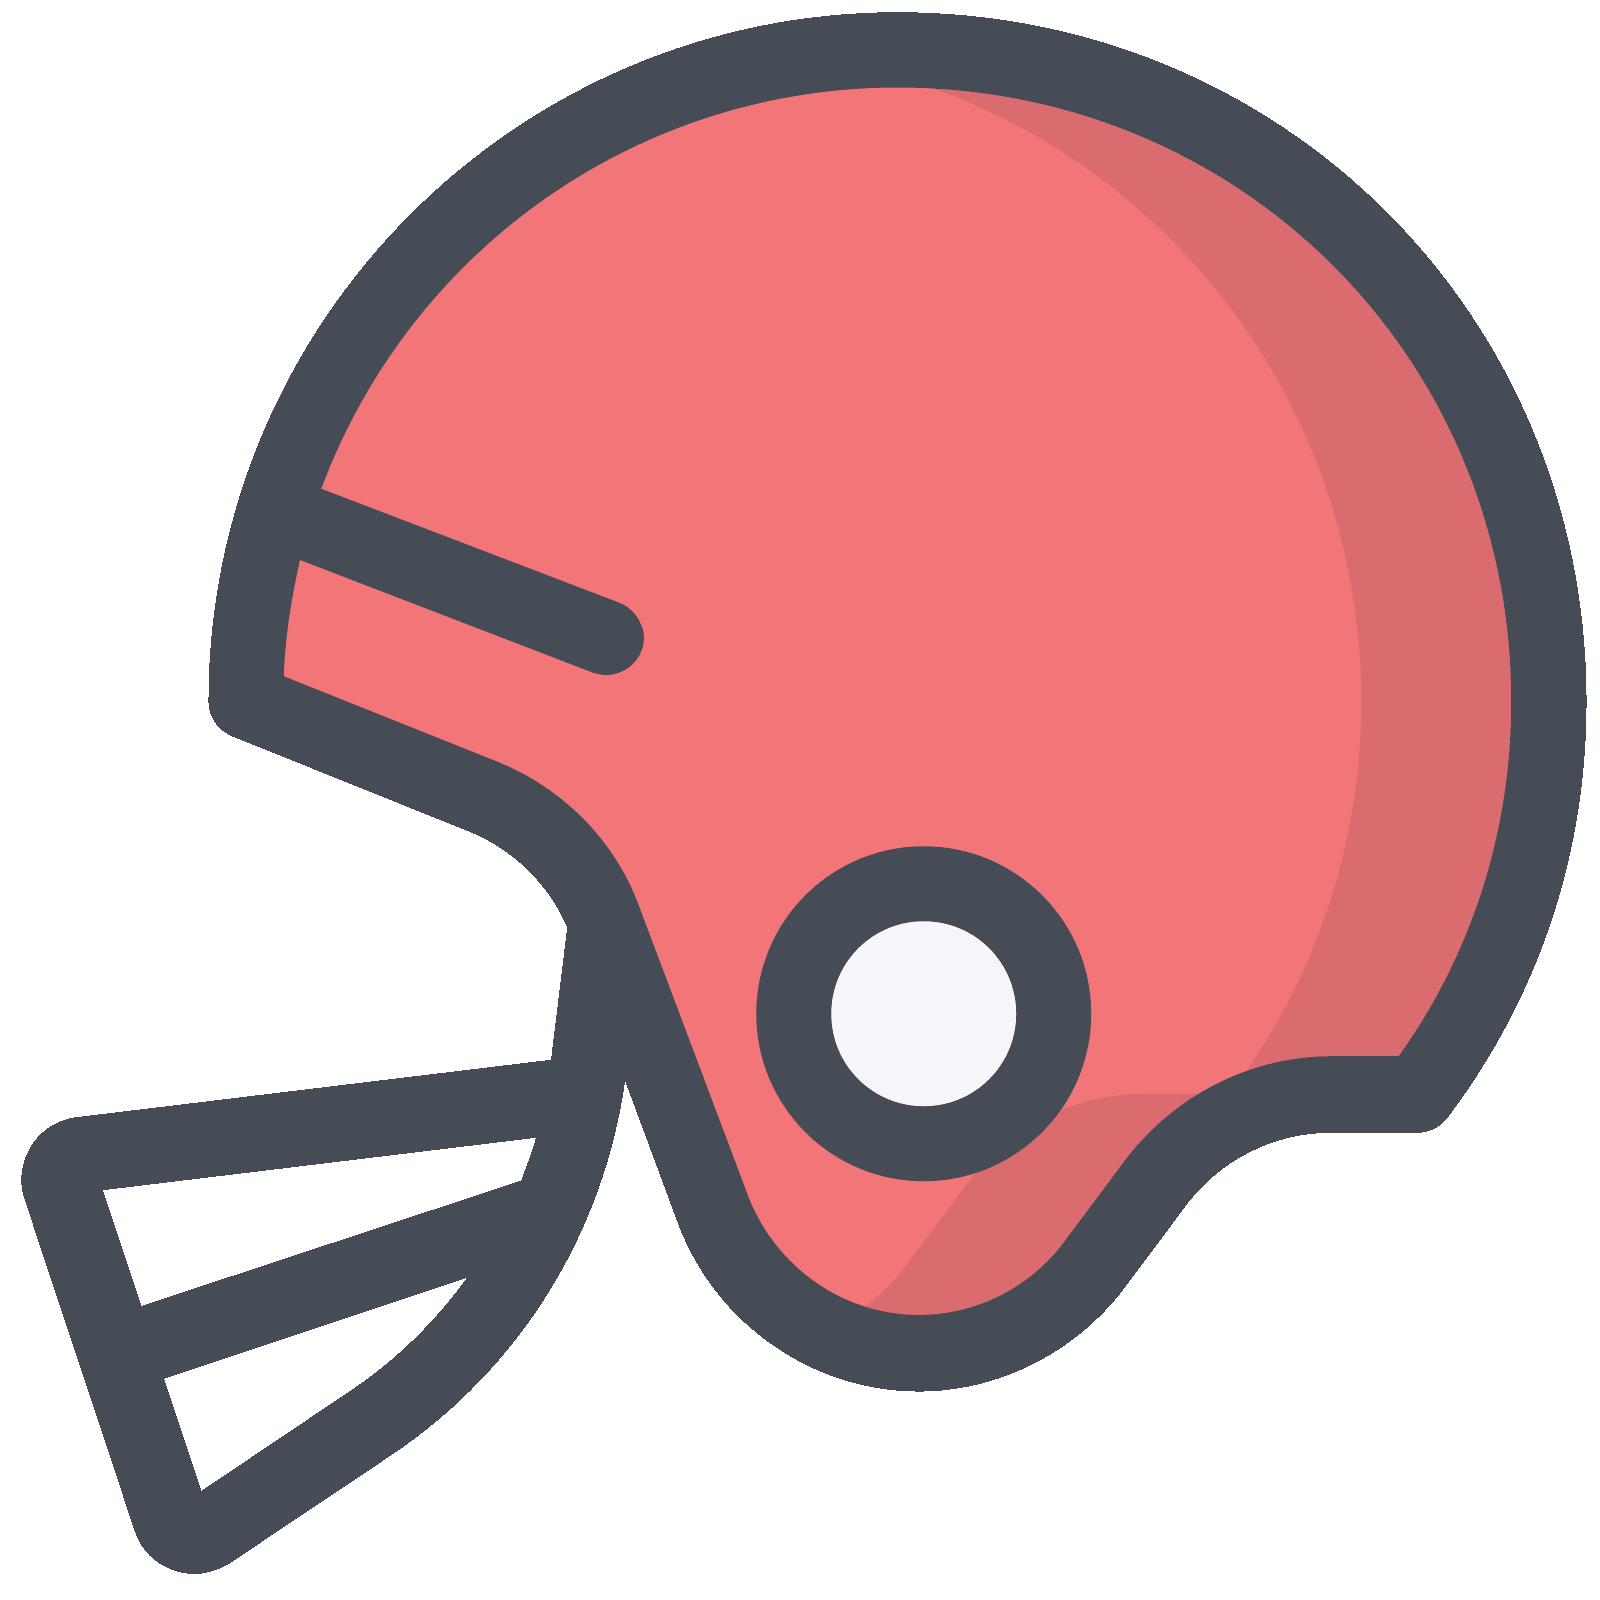 Americain vector free download. Football helmet png